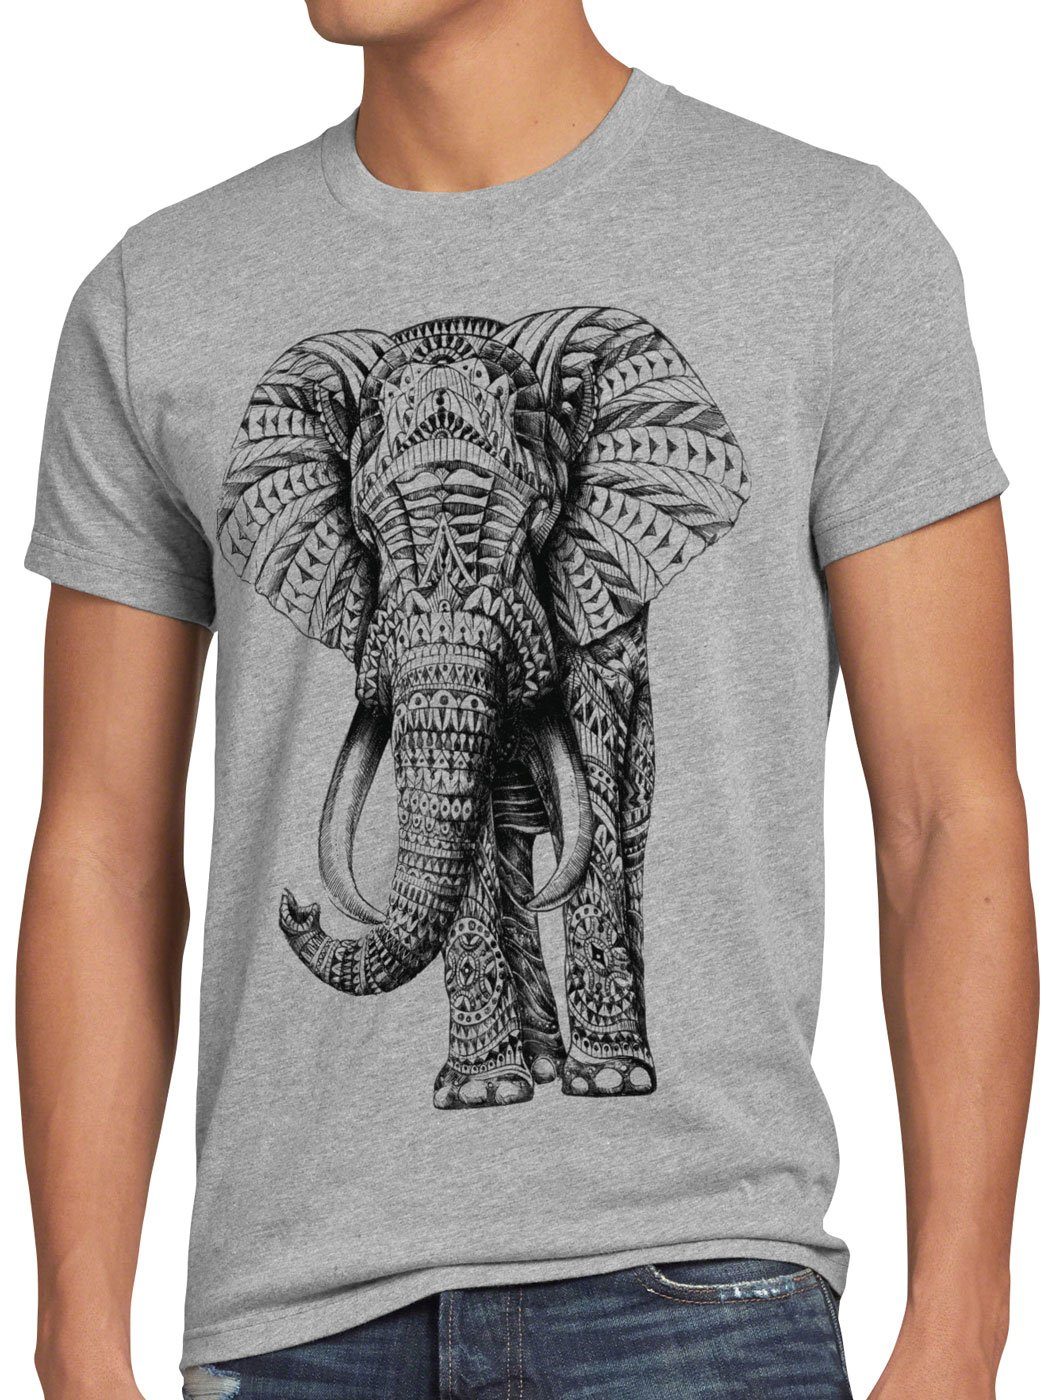 style3 Print-Shirt Herren T-Shirt Ink Elefant elephant zoo urlaub grau meliert